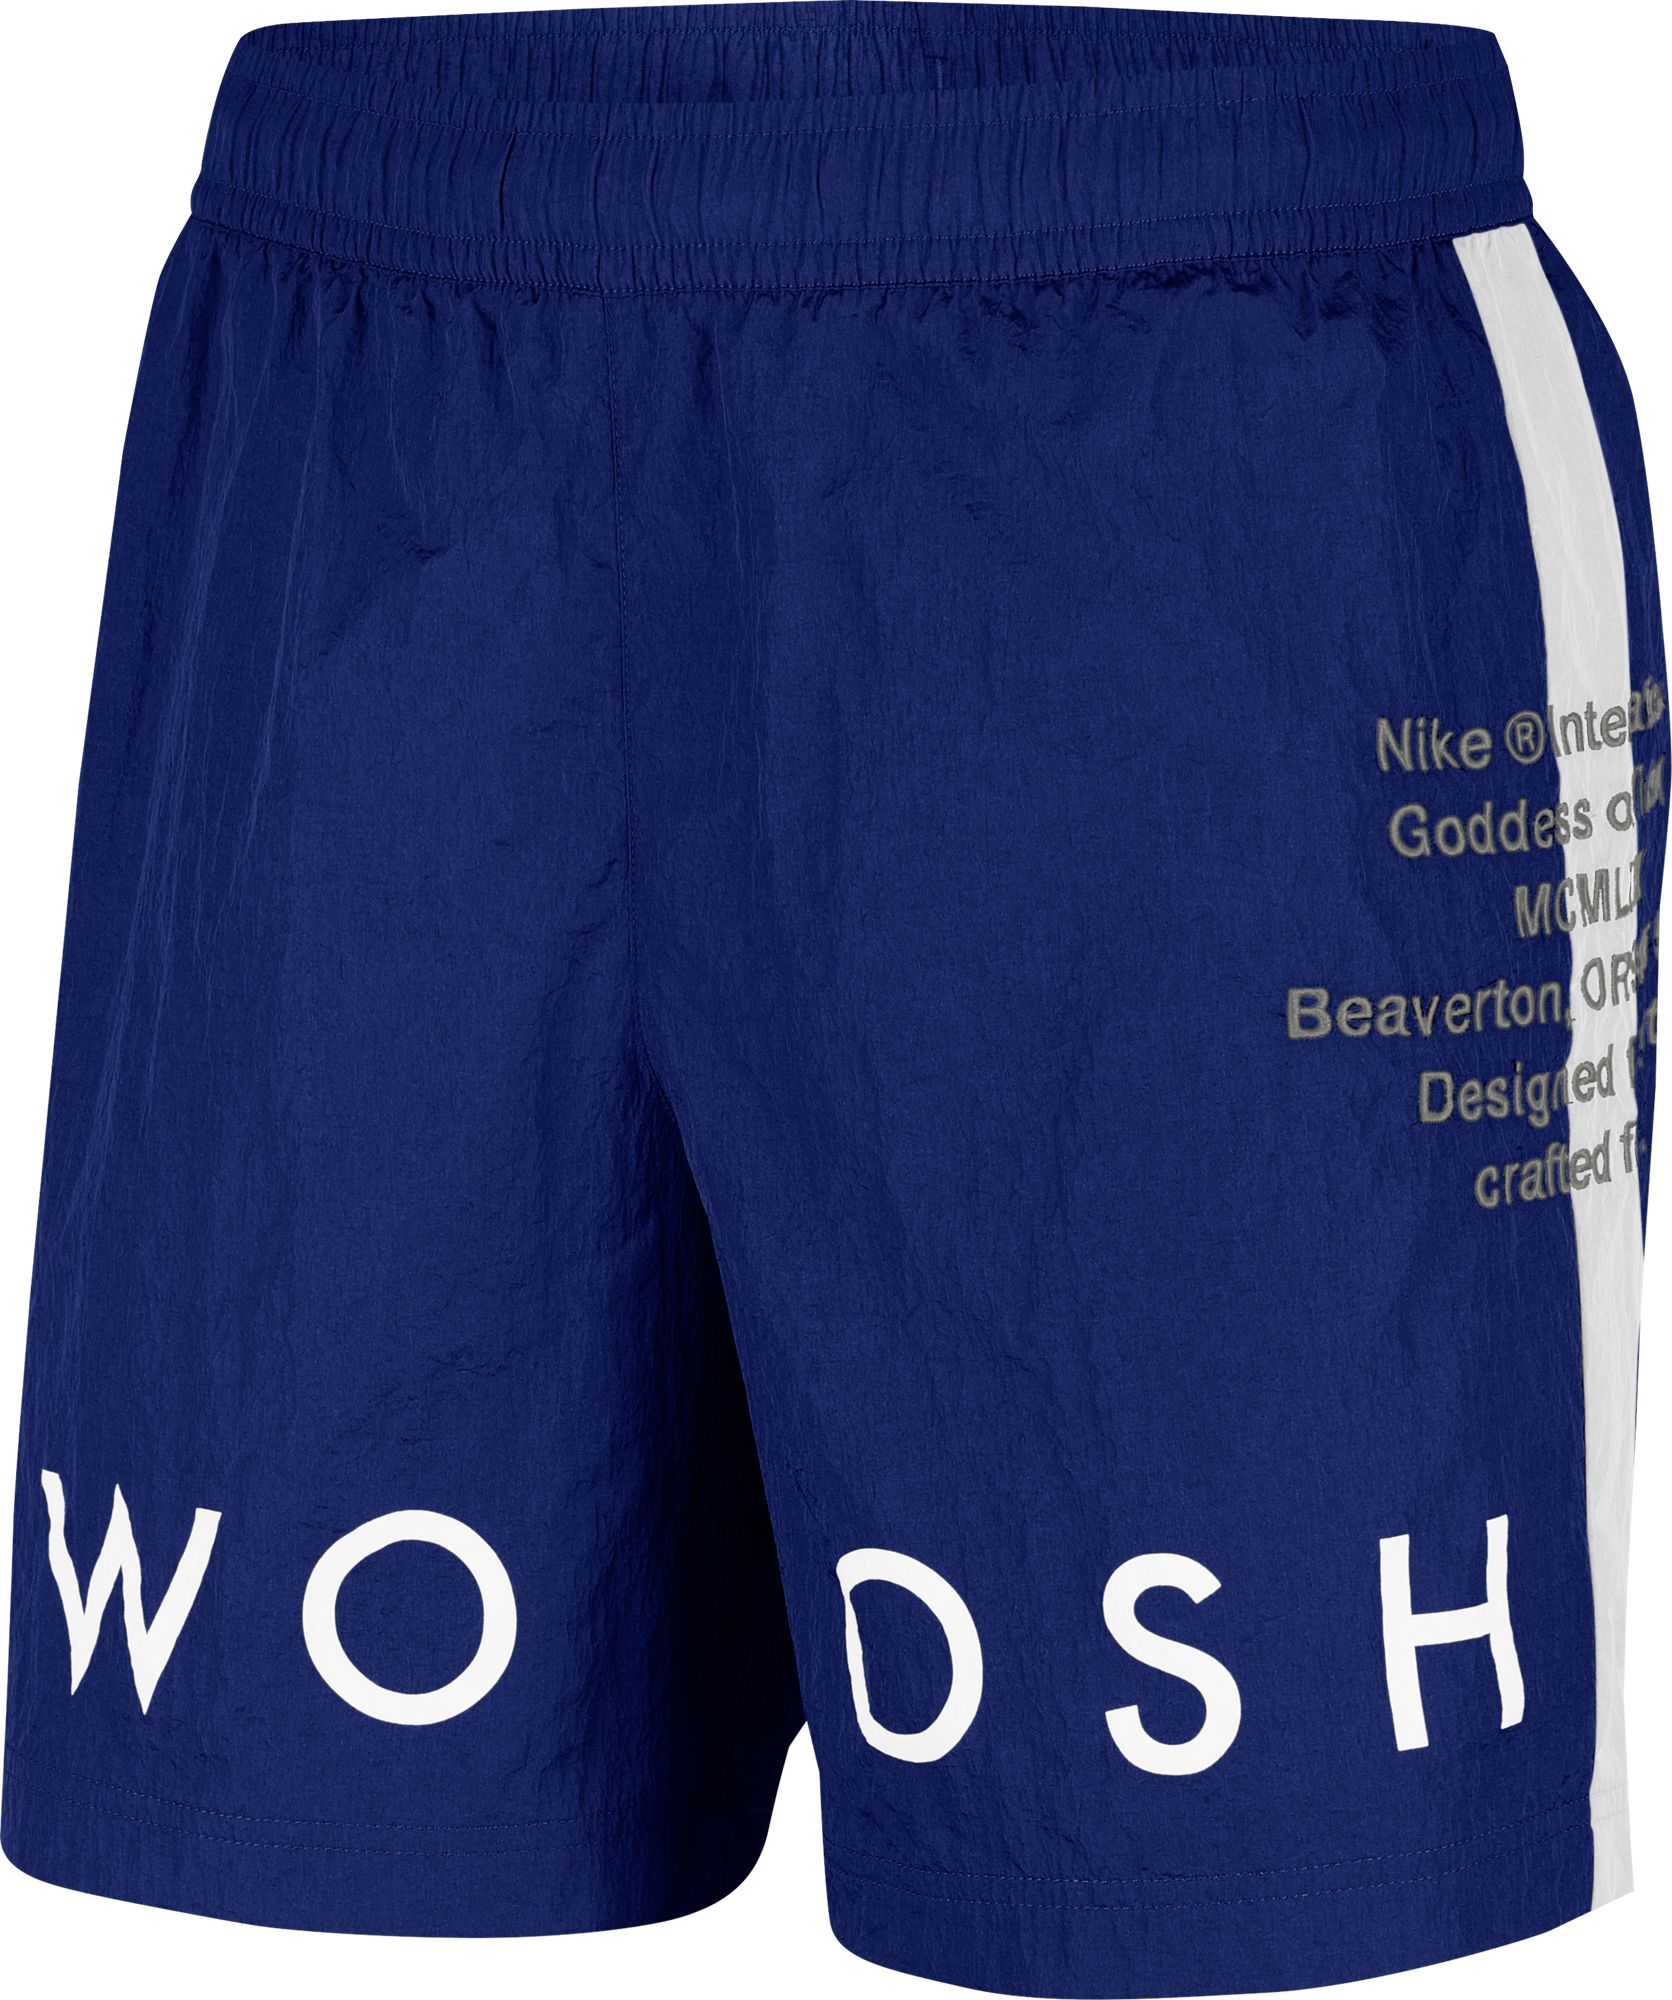 double swoosh shorts